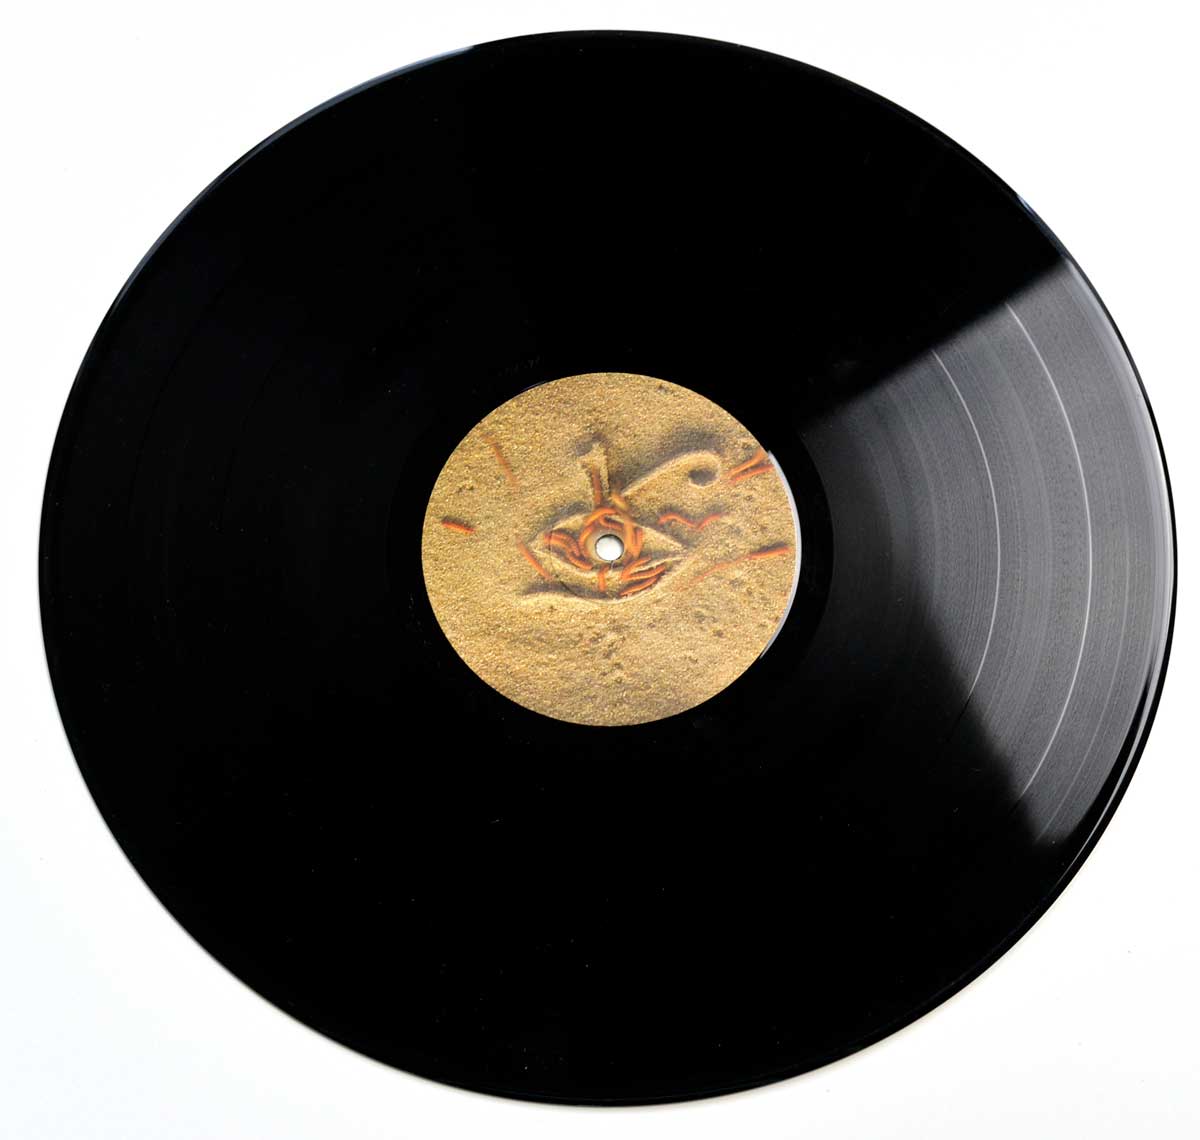 Photo of "IRON MAIDEN - Powerslave OIS EU DE" 12" LP Record - Side One: